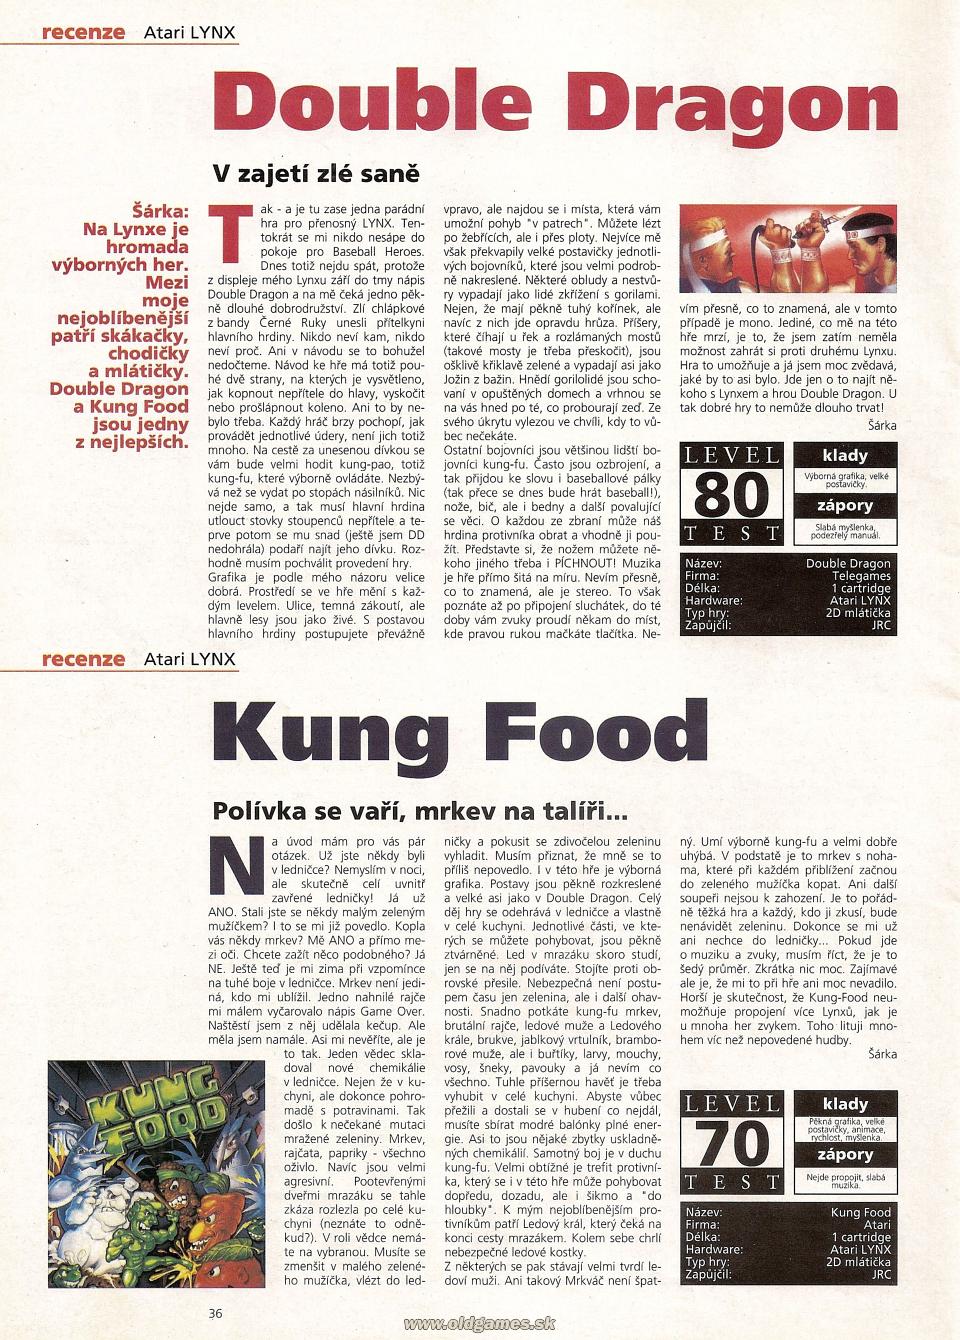 Double Dragon, Kung Food (Atari Lynx)